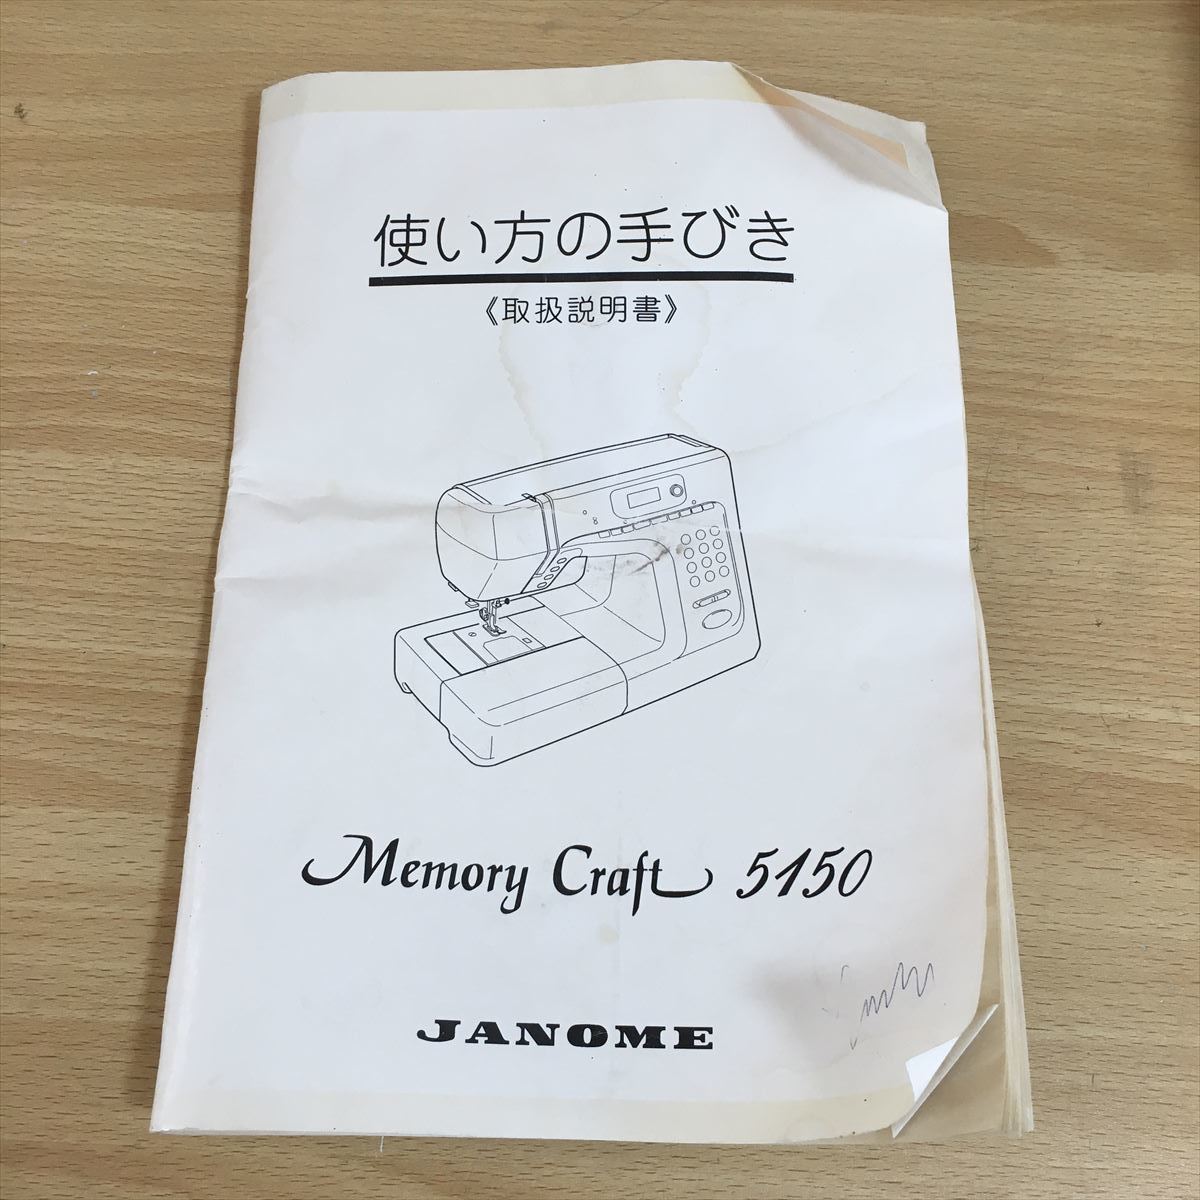 JANOME ジャノメ Memory Craft 5150 MODEL 840 ミシン コンピューターミシン ハンドクラフト 手芸 手工芸 裁縫 裁縫道具 2 カ 4992_画像9